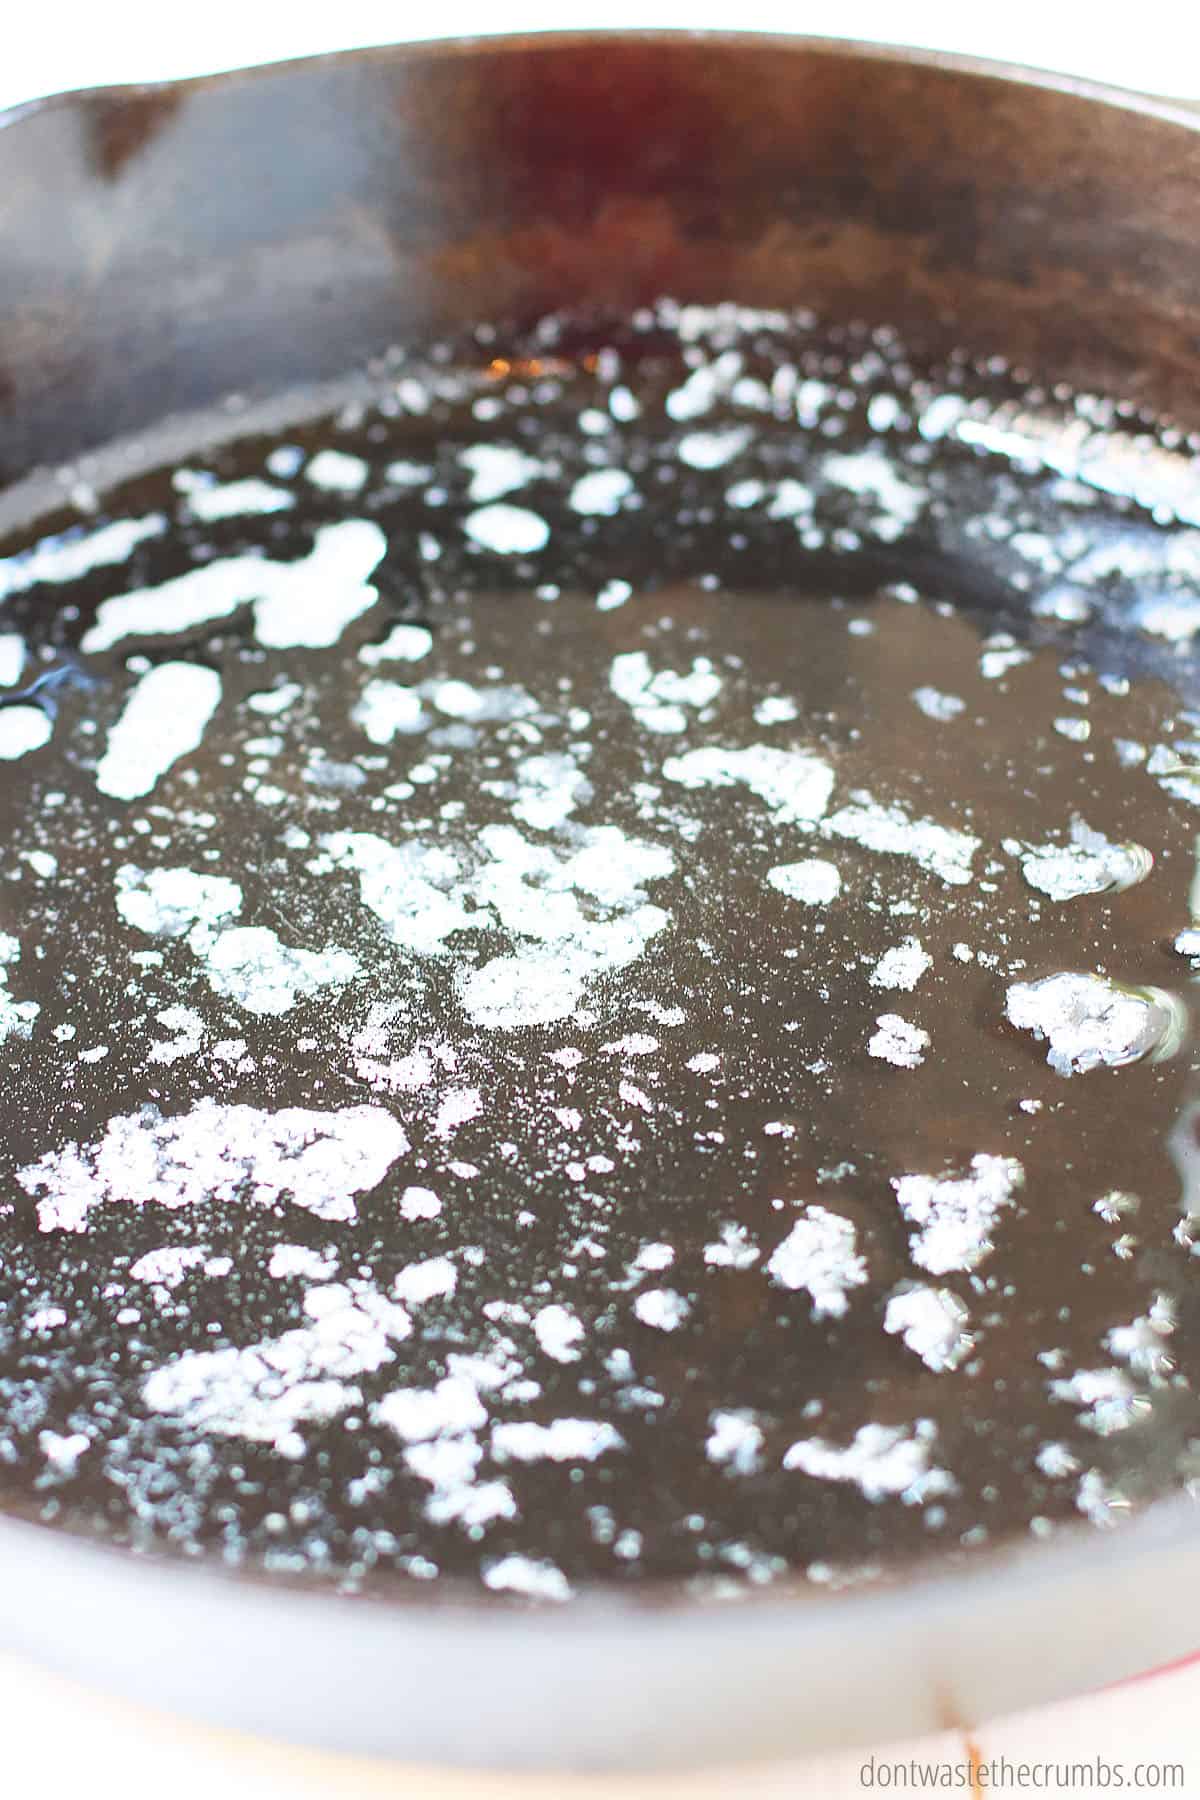 Butter melting inside the cast iron skillet